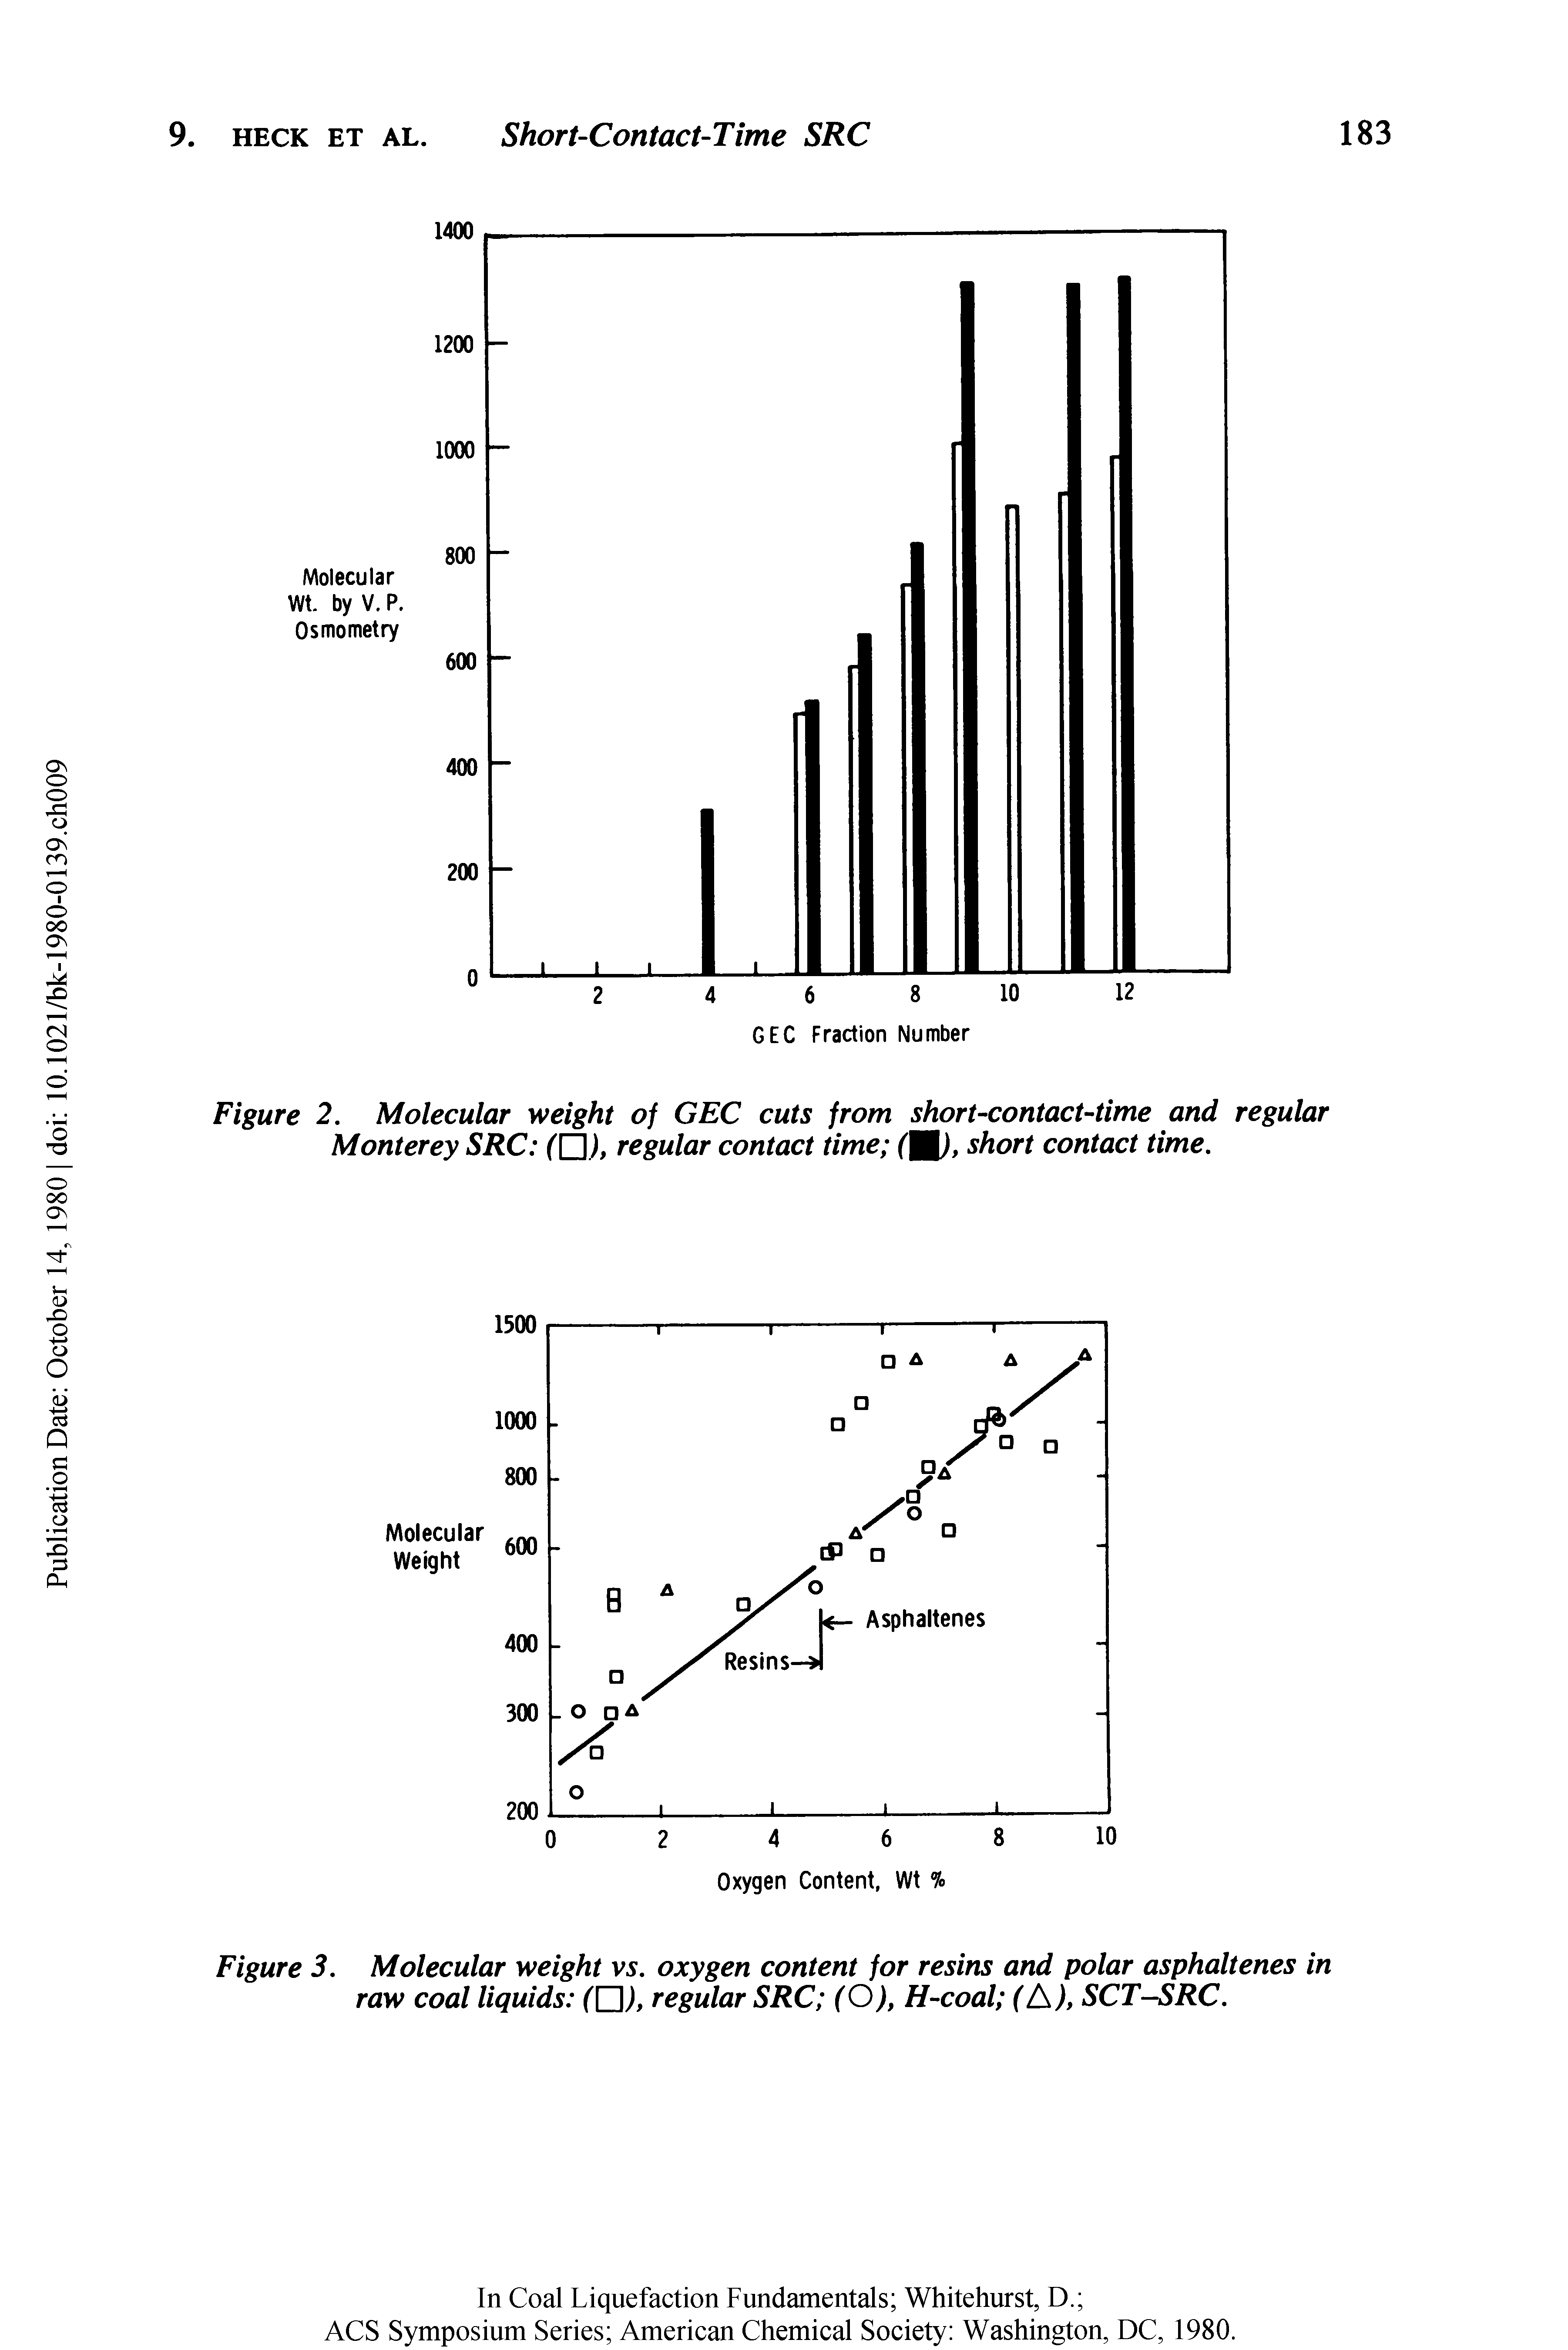 Figure 3. Molecular weight vs. oxygen content for resins and polar asphaltenes in raw coal liquids ( Z ), regular SRC (O), H-coal (A), SCT-SRC.